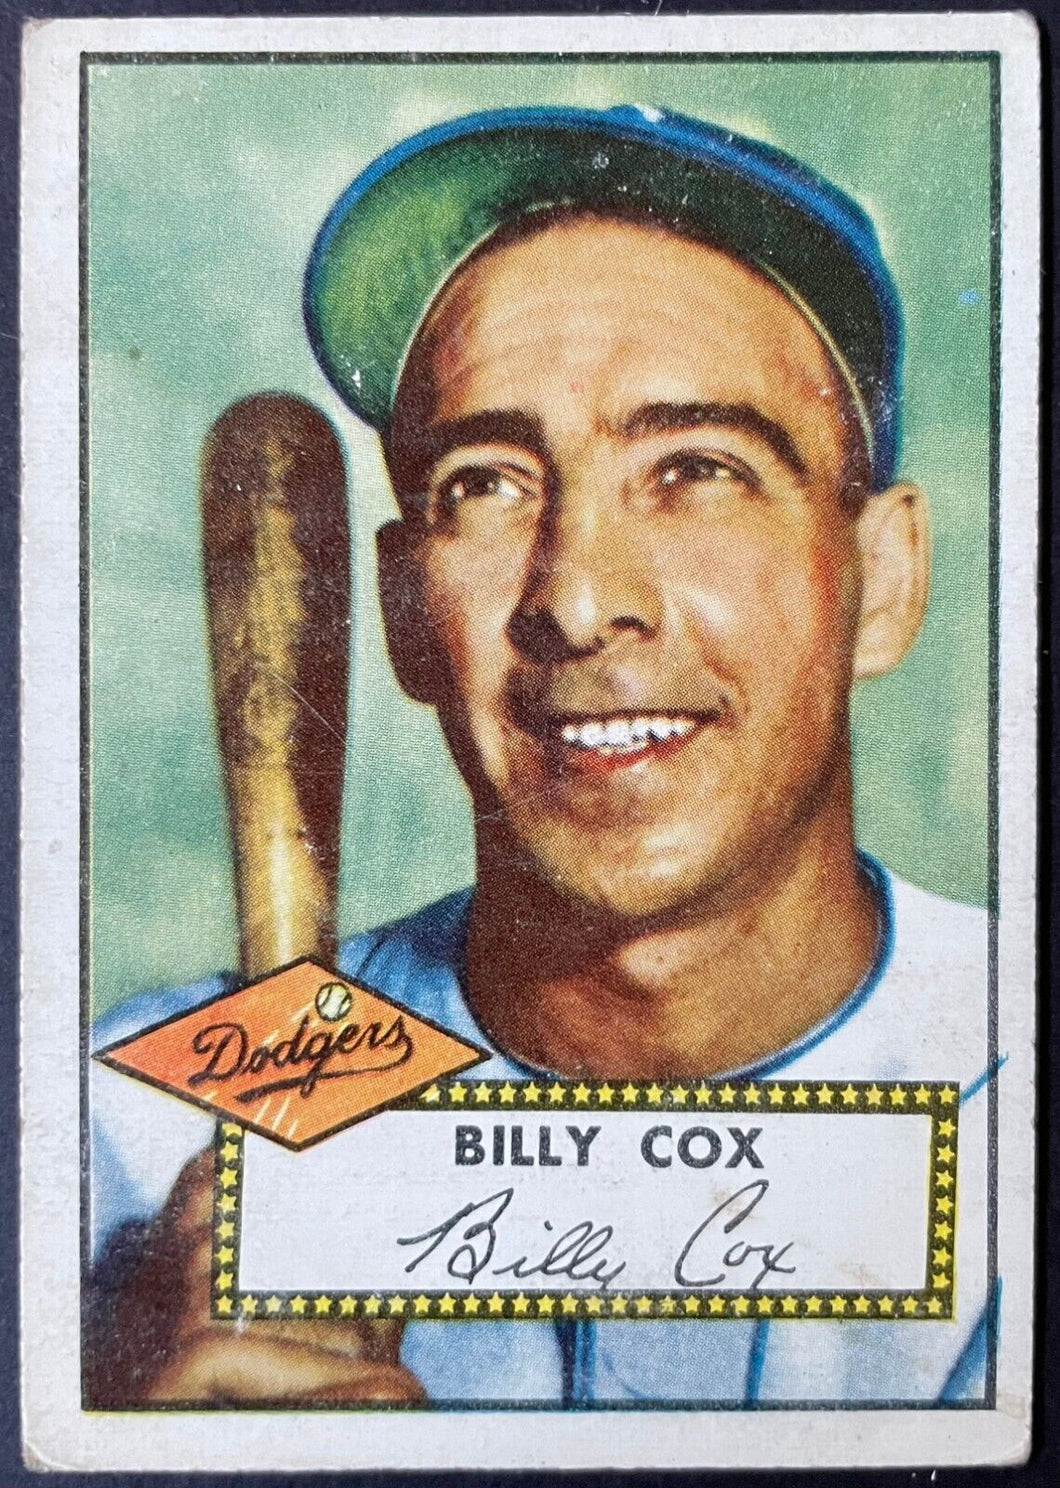 1952 Topps Baseball Billy Cox #232 Brooklyn Dodgers MLB Card Vintage